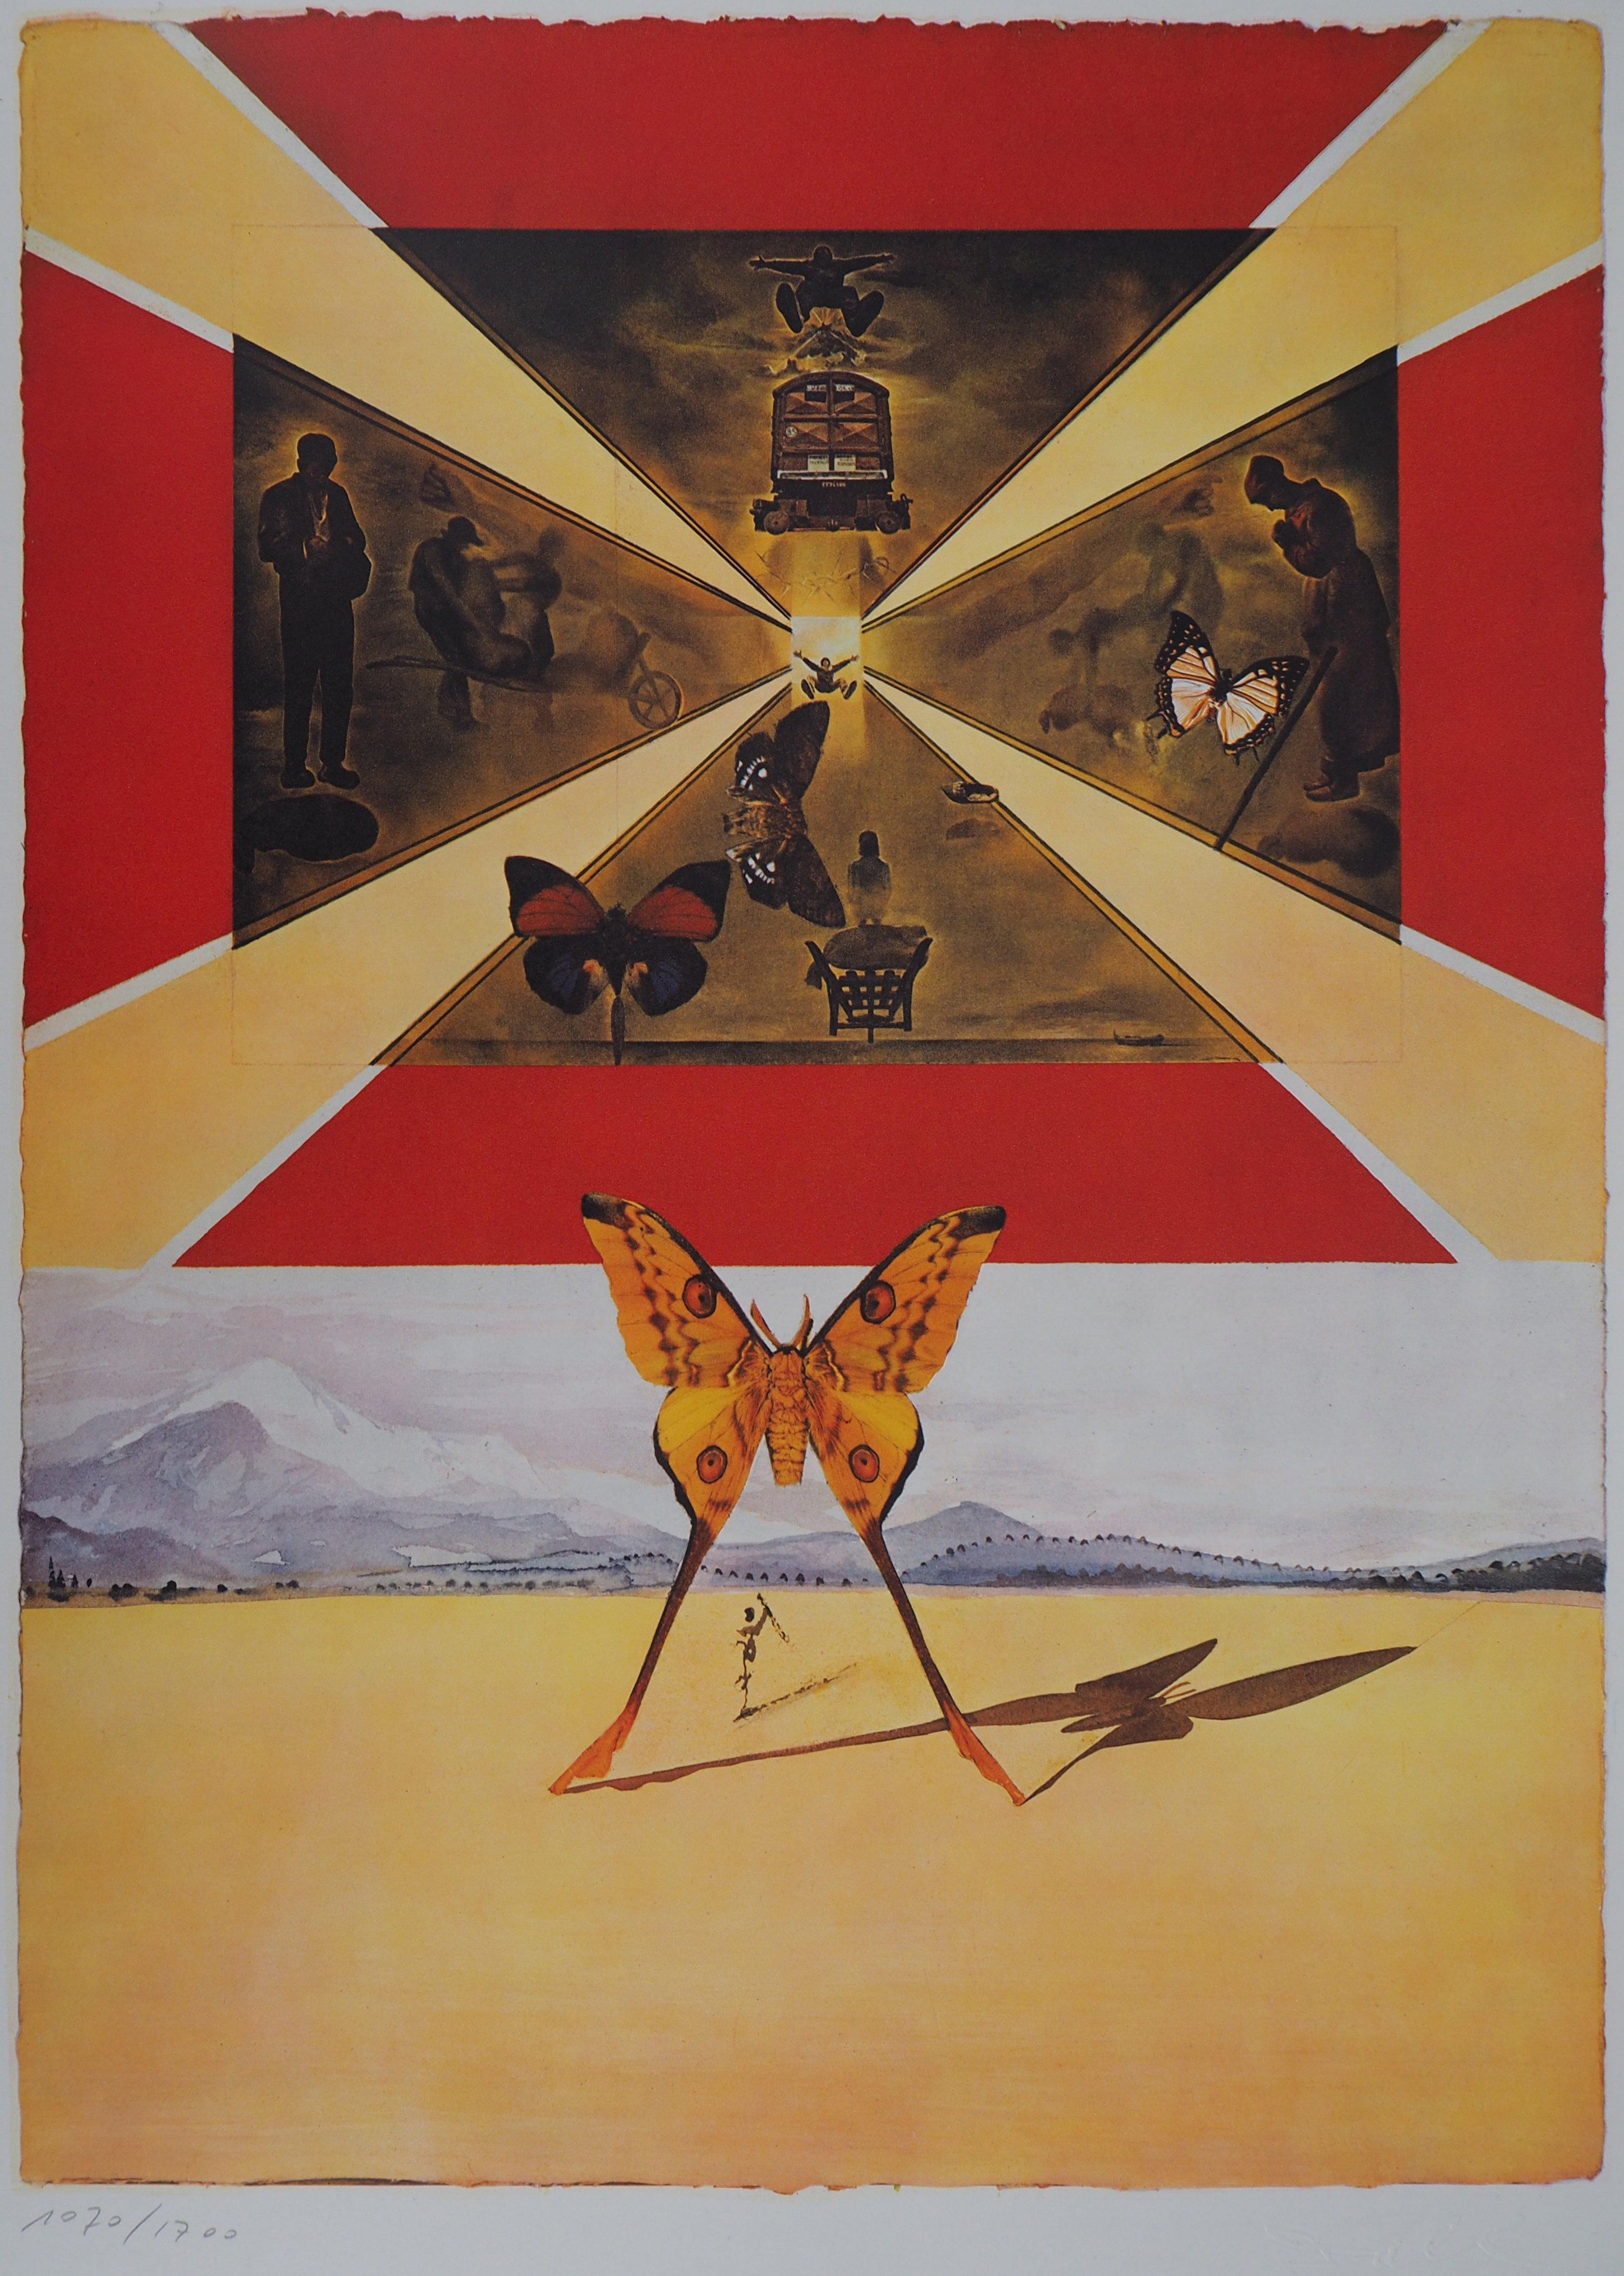 Schmetterlingsgarnitur: Roussillon – Heliogravur – 1969 (Abb. #69-2 E) – Print von Salvador Dalí